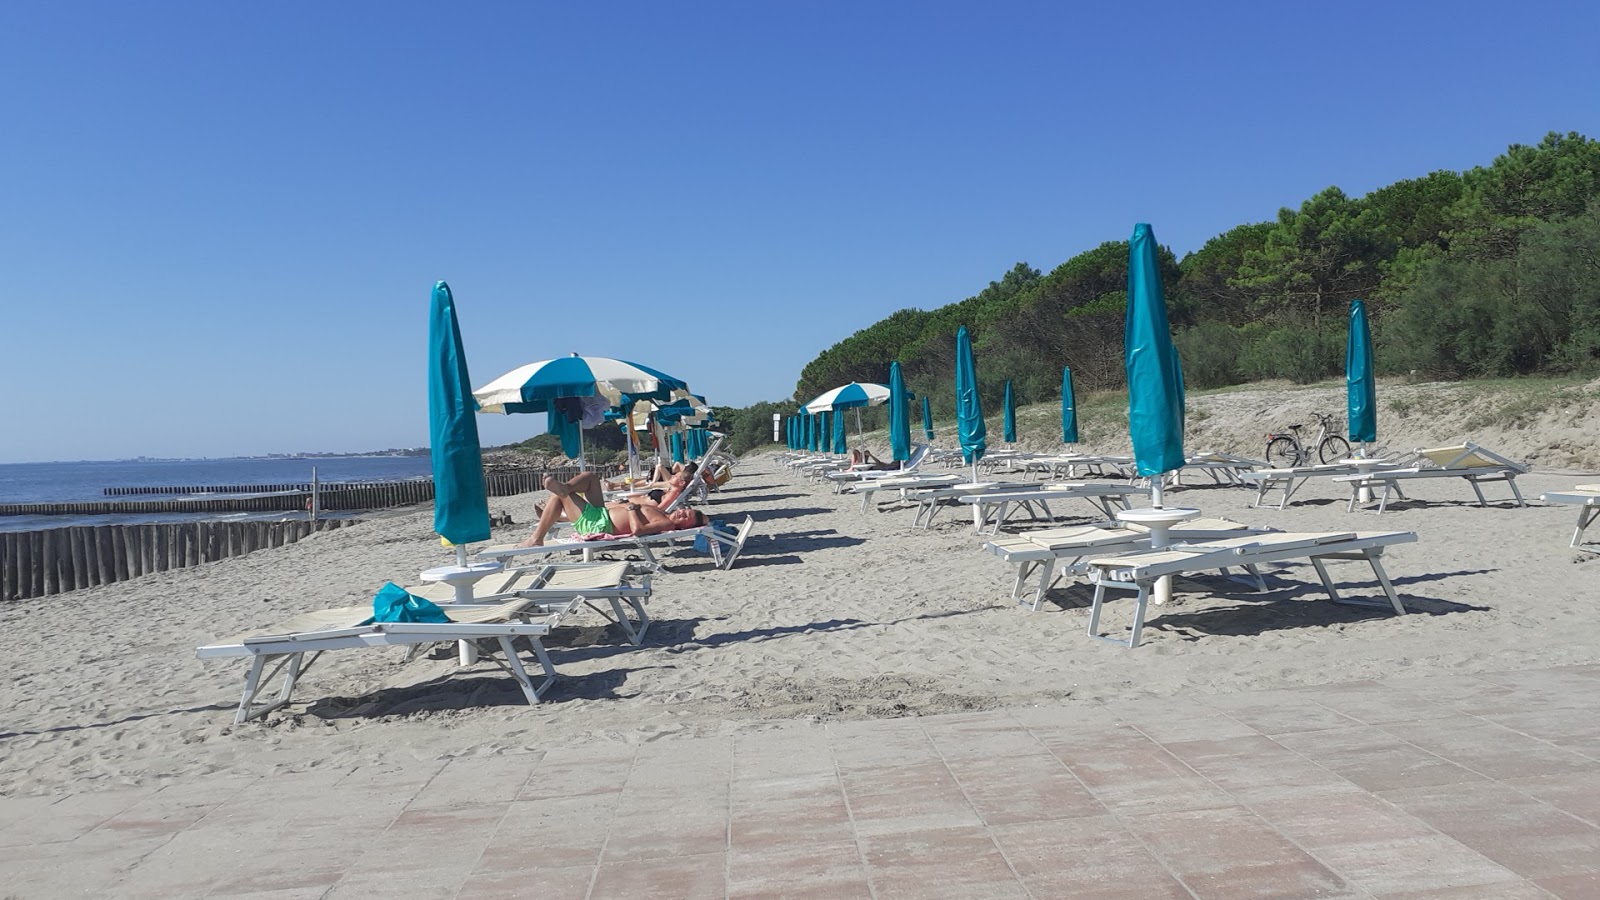 Spiaggia Romea'in fotoğrafı turkuaz su yüzey ile